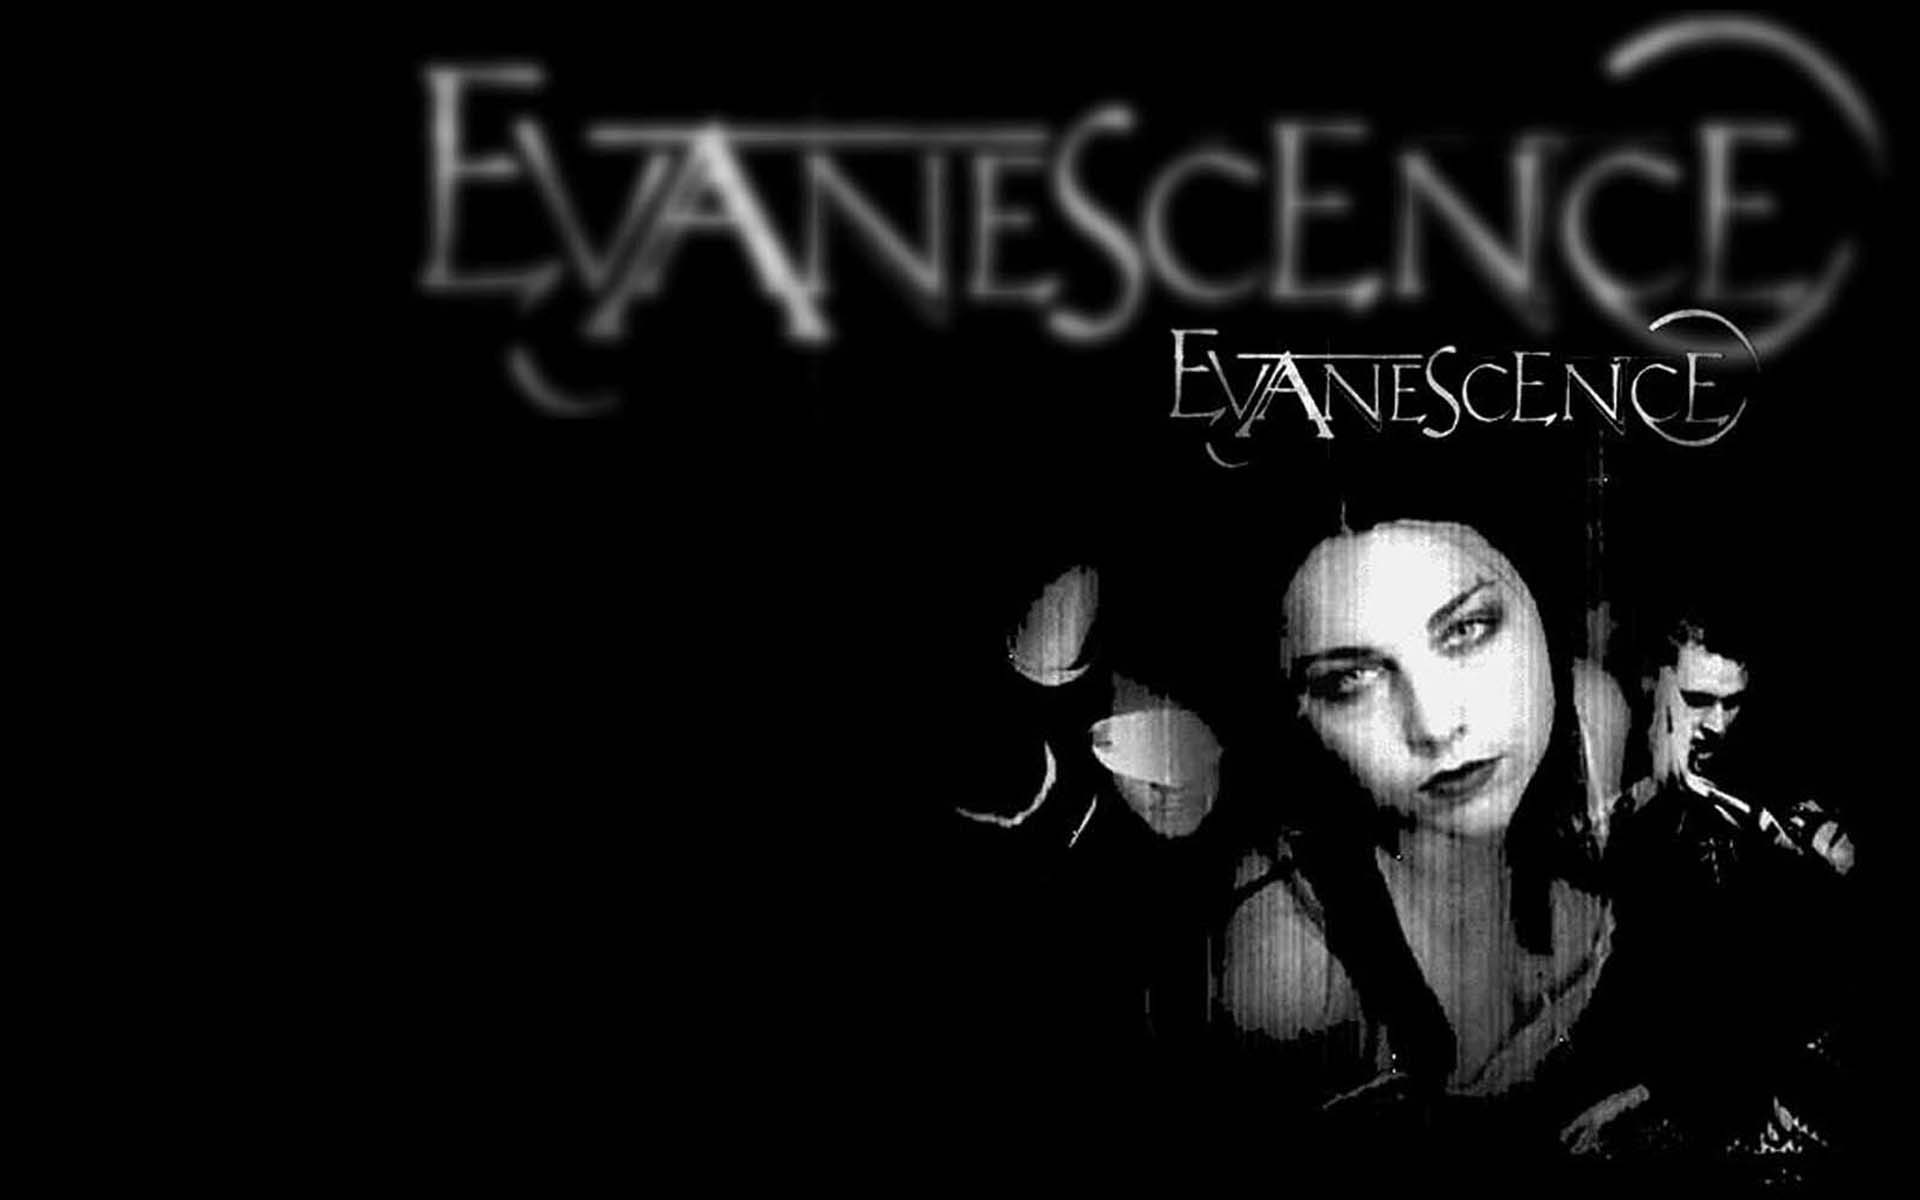 Evanescence Wallpaper Resolution in Wallpaper HD 1920x1200PX